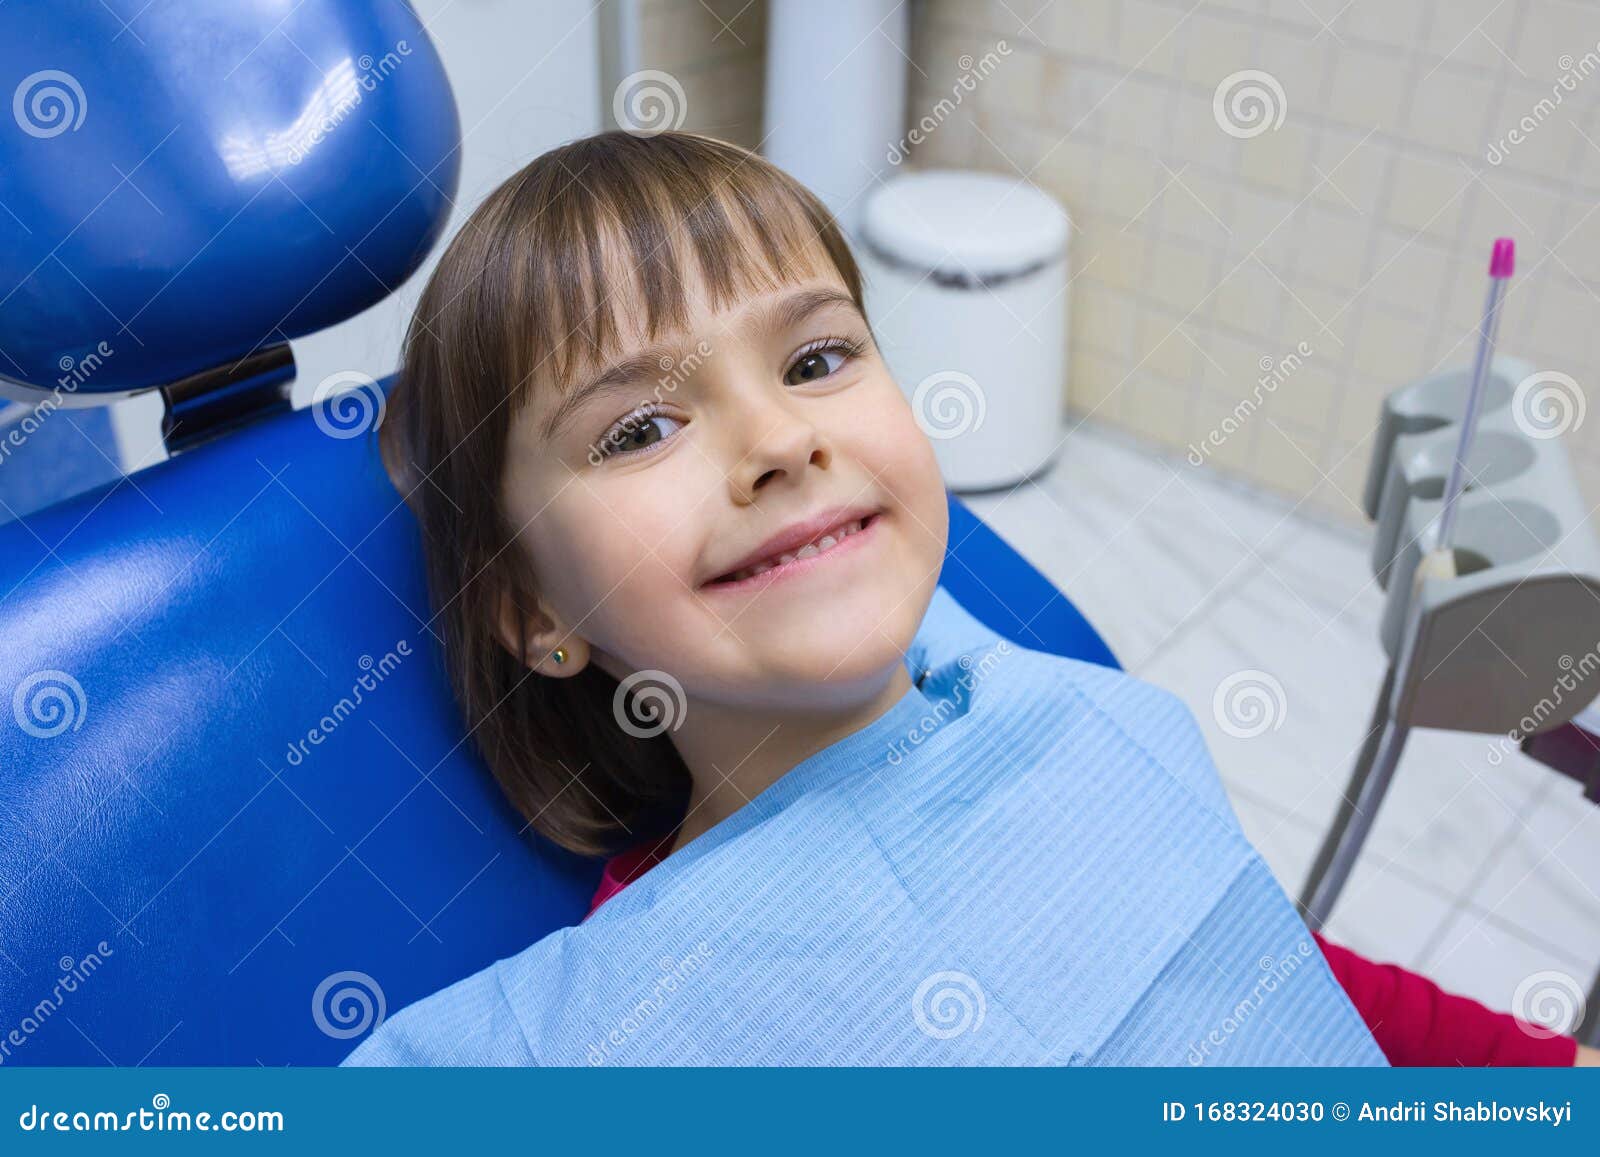 a portrait of a little girl patient in a dental chair in a dentistÃ¢â¬â¢s office